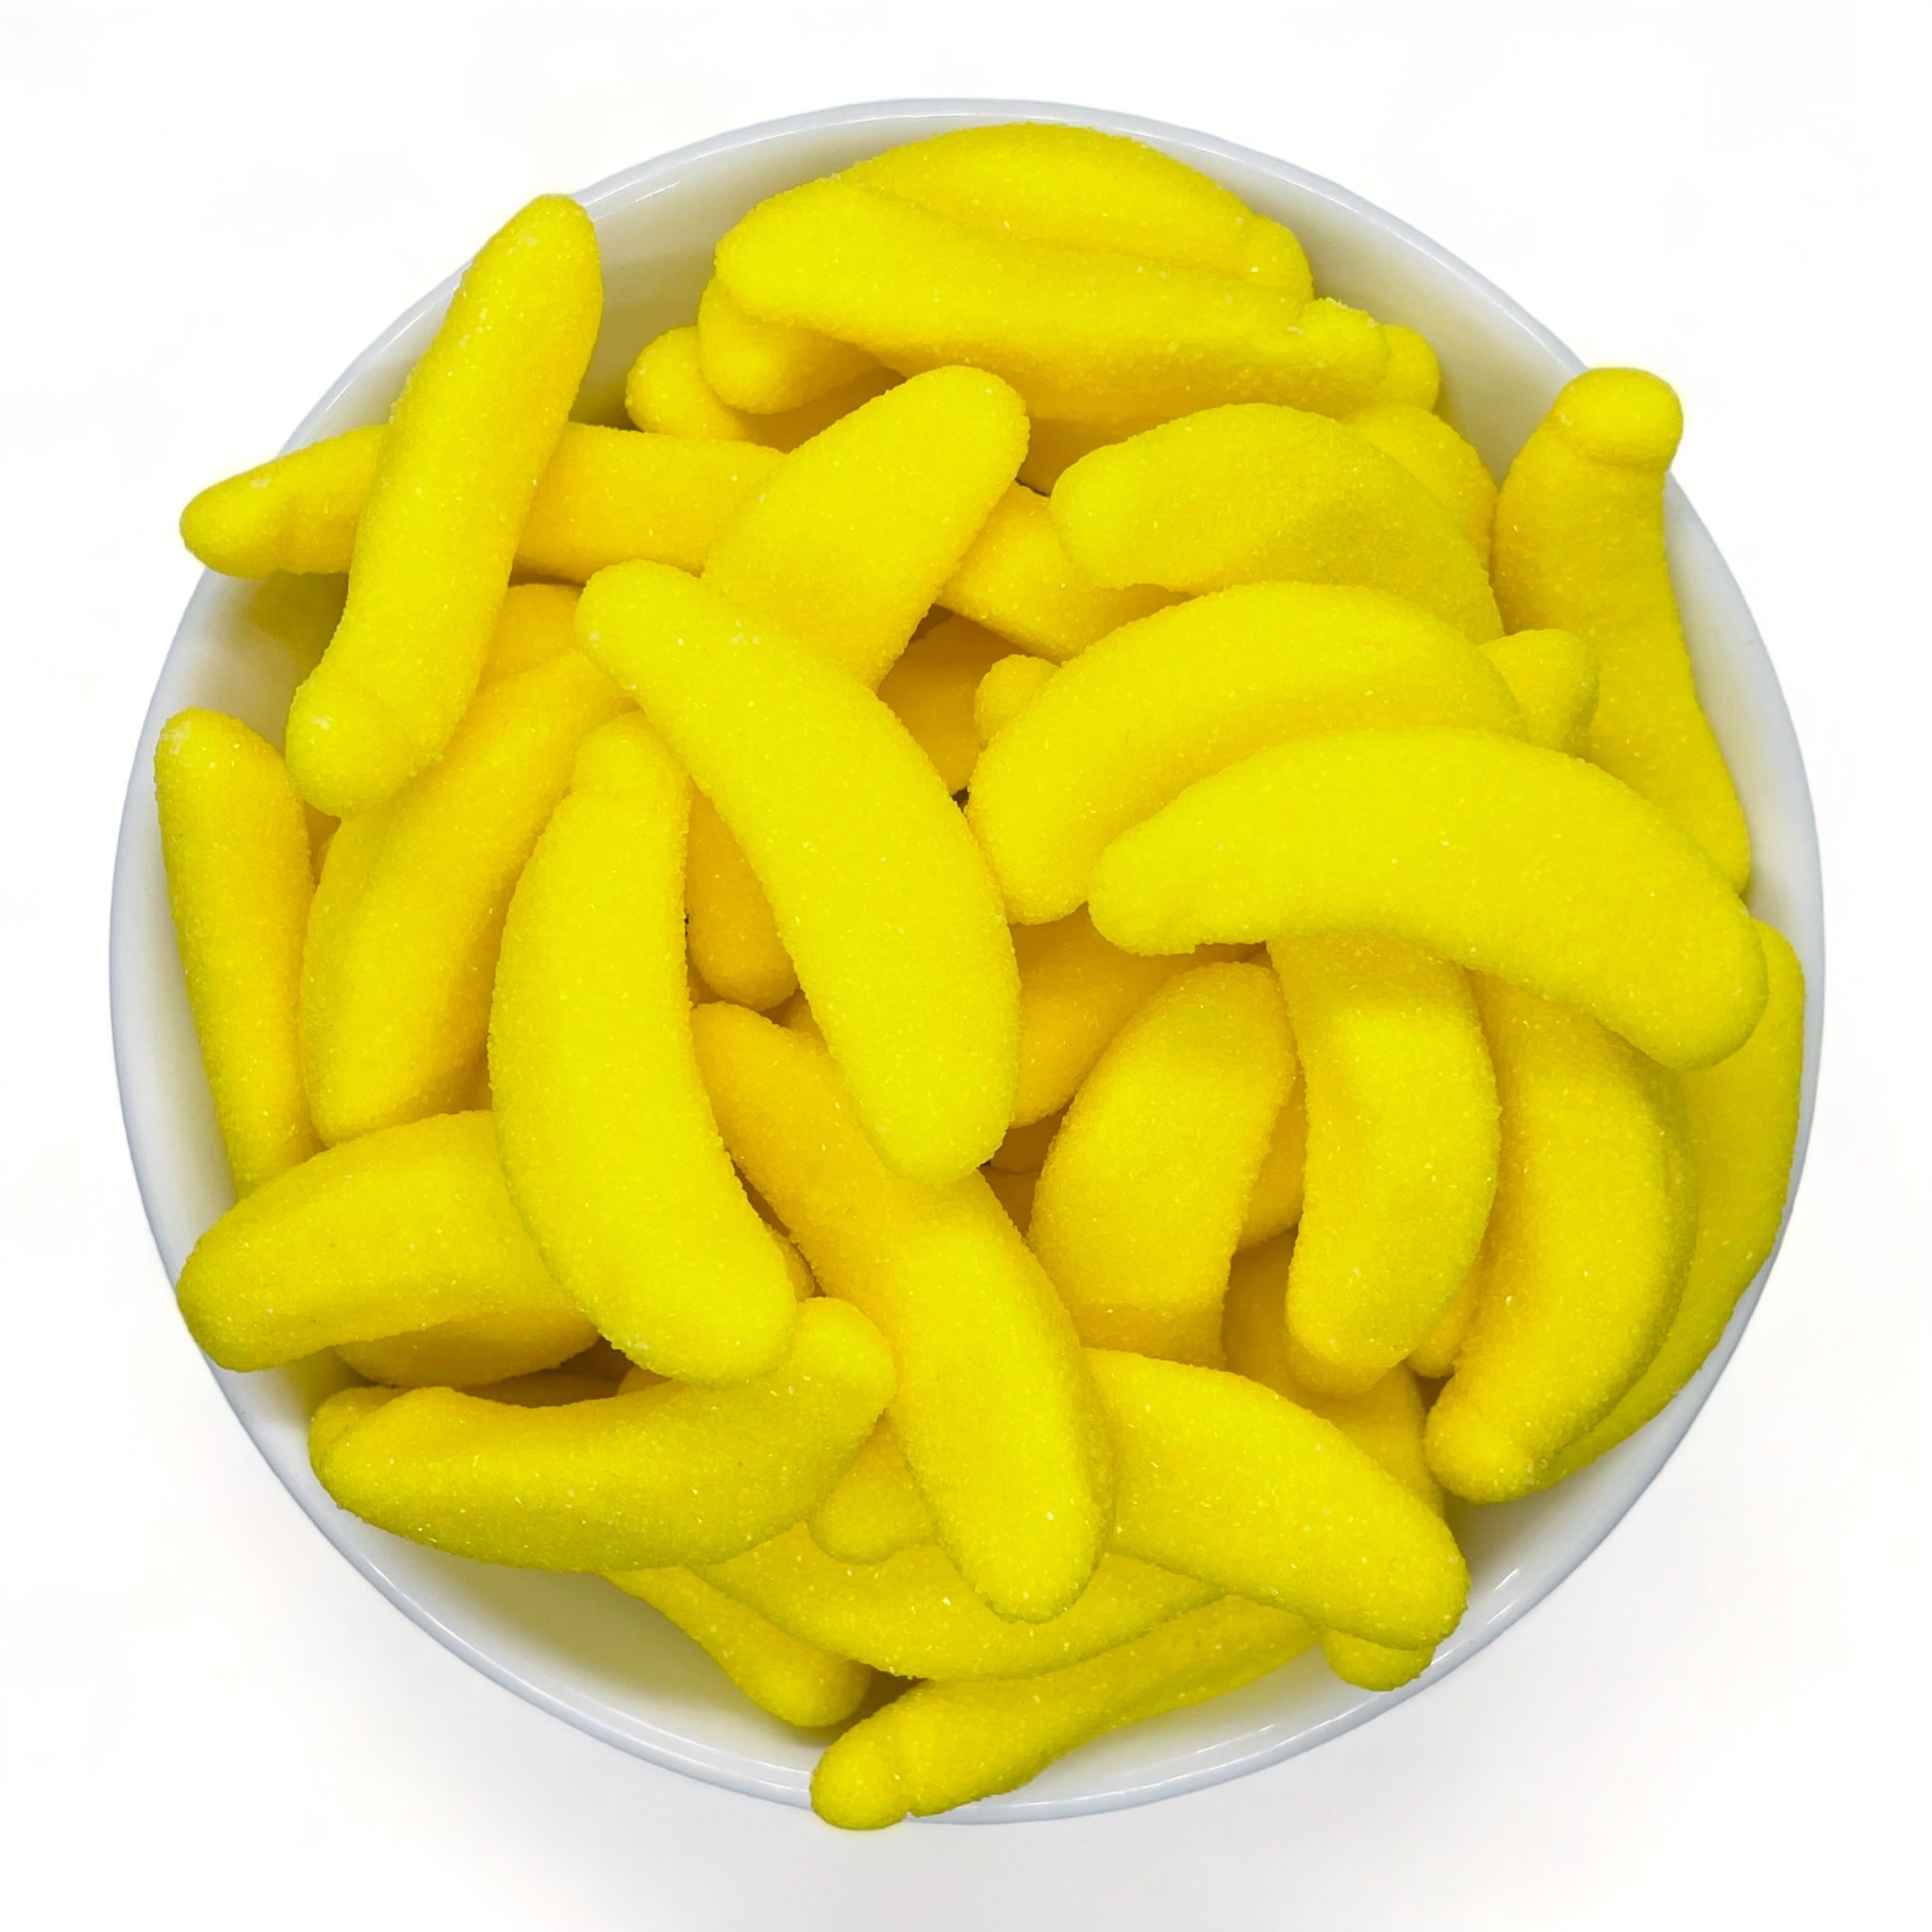 Efrutti Gummi Bunch of Bananas 3.5oz Bag